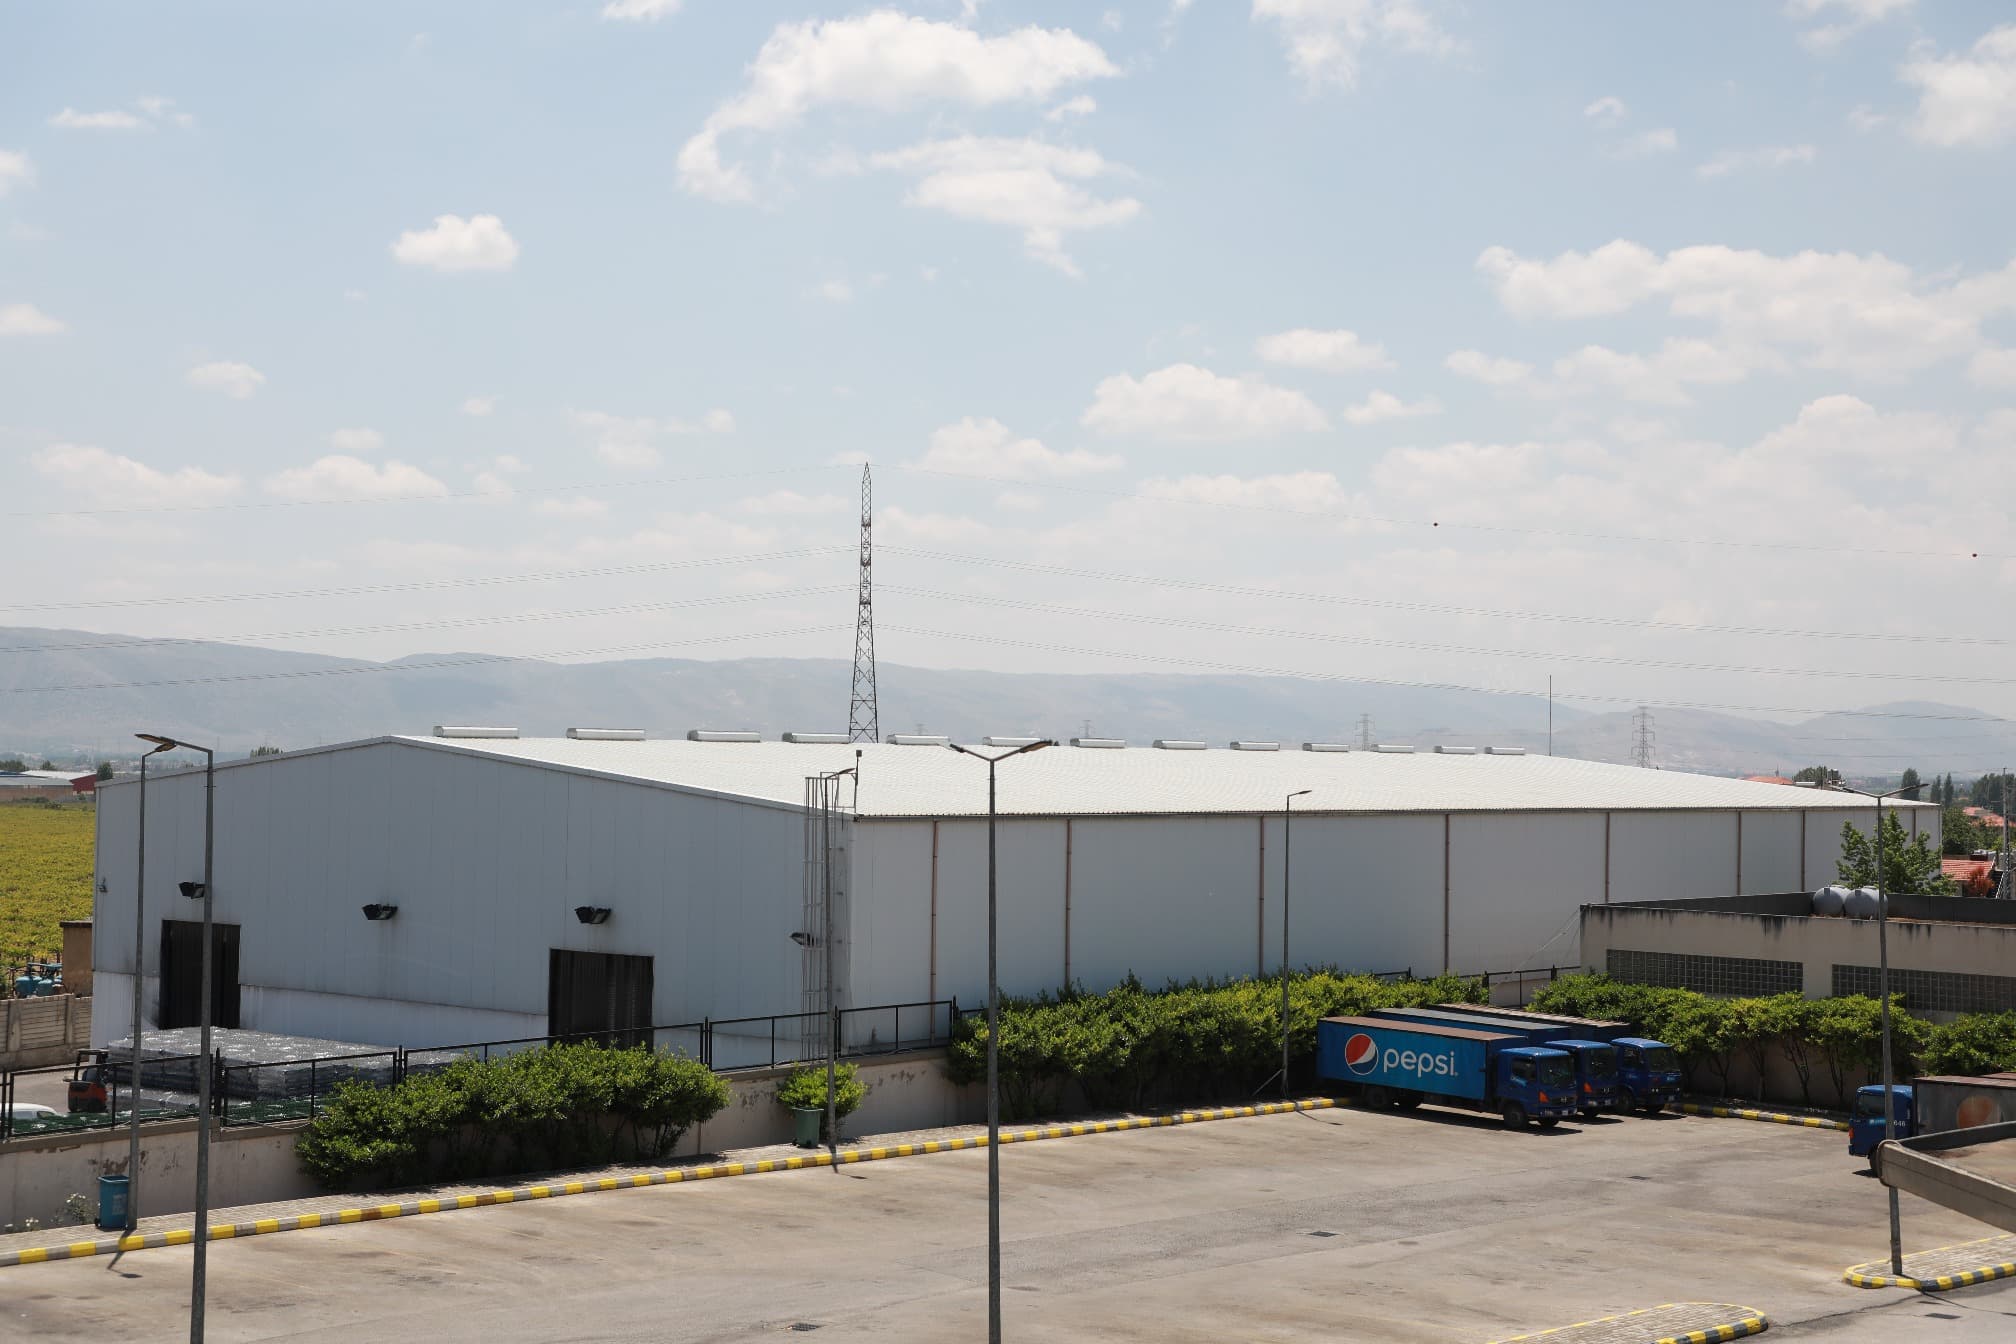 Pepsi warehouse in Zahle